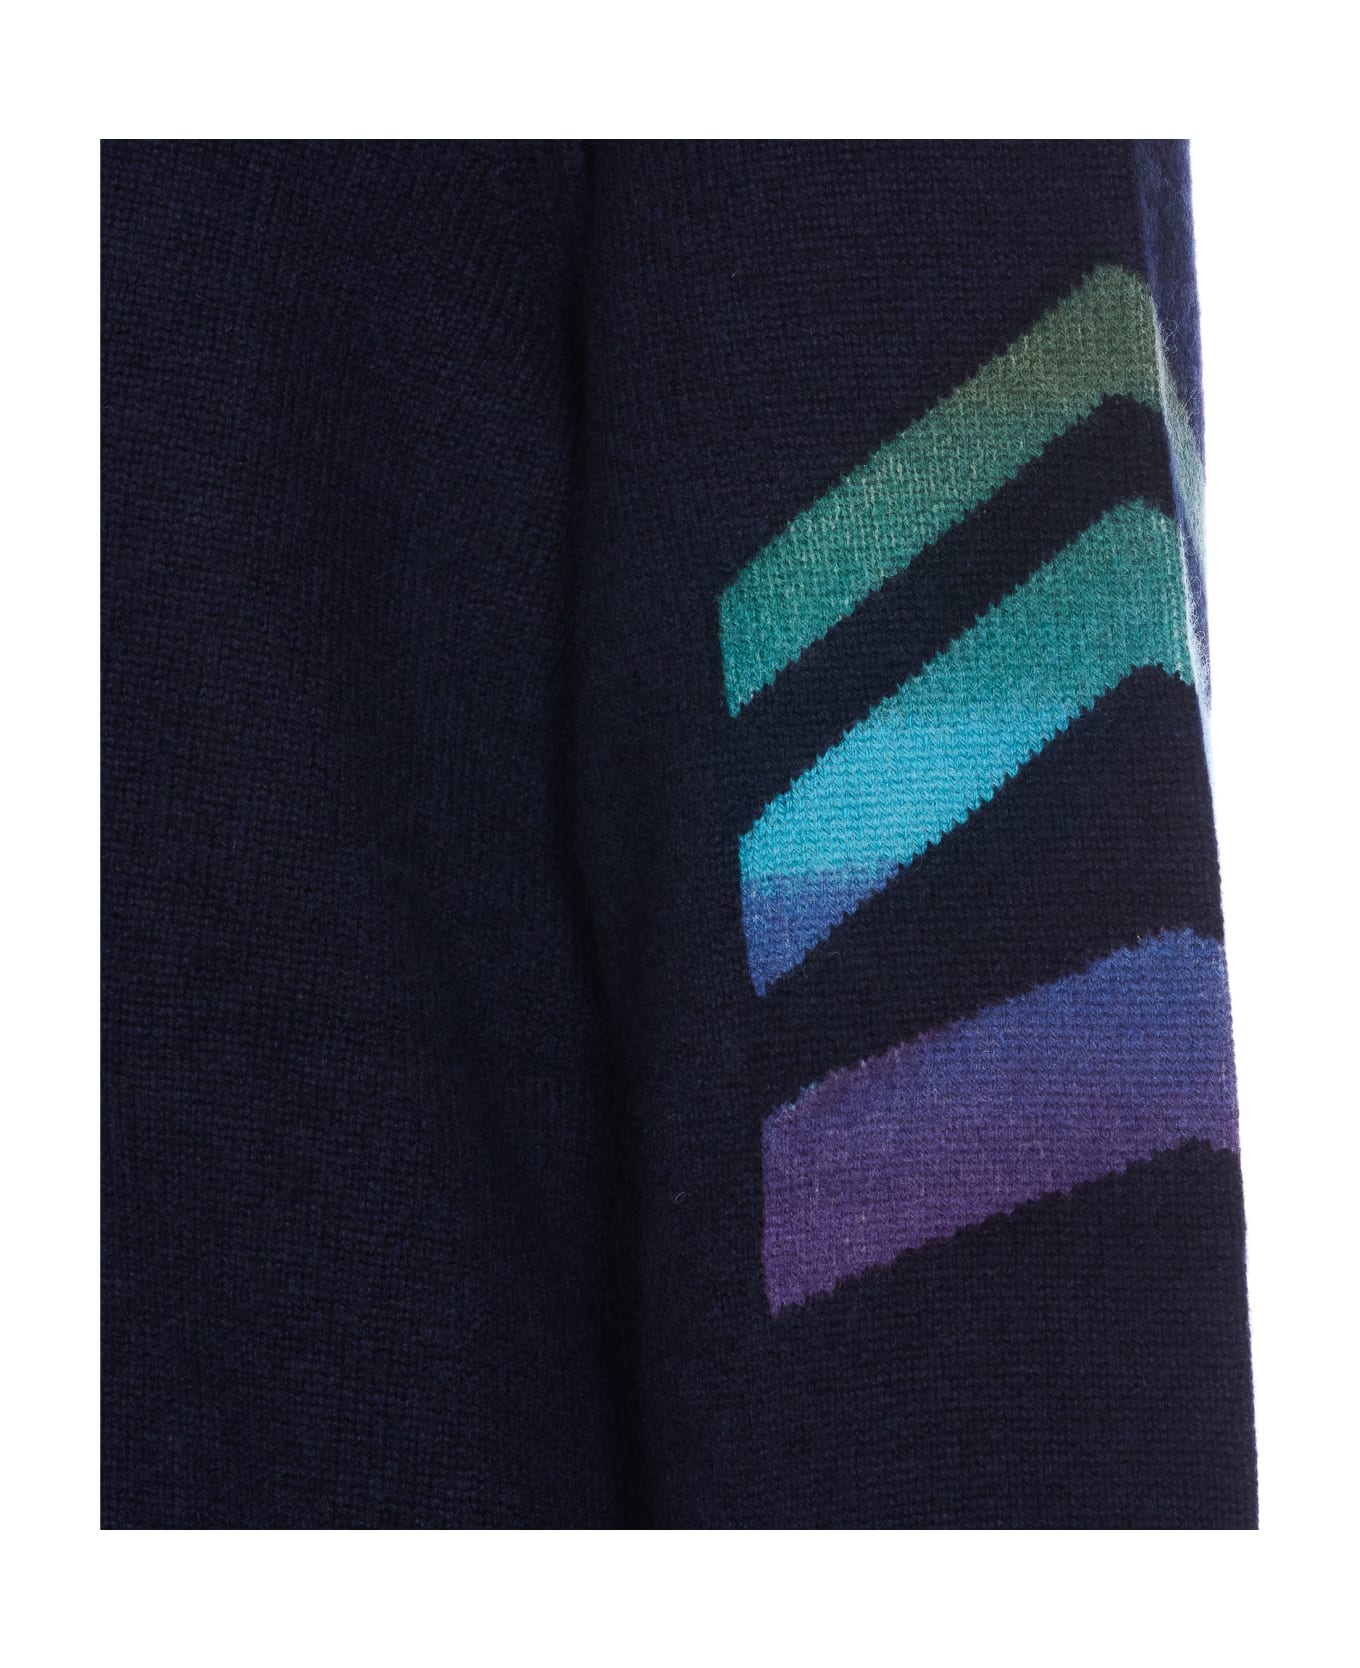 Zadig & Voltaire Kennedy Sweater - Blue